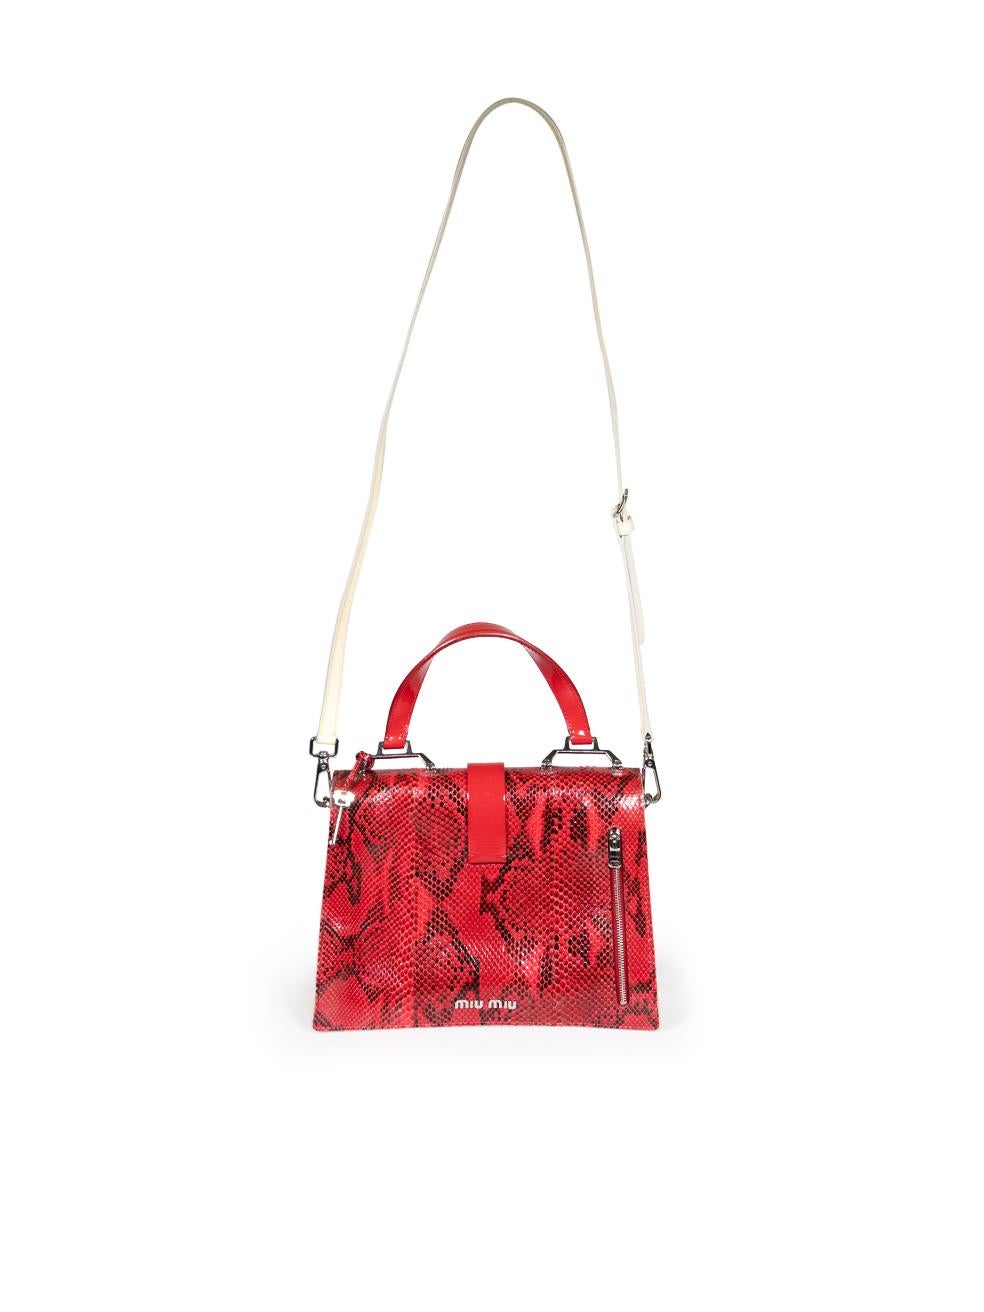 Miu Miu Red Snakeskin Push Lock Top Handle Bag In Good Condition For Sale In London, GB